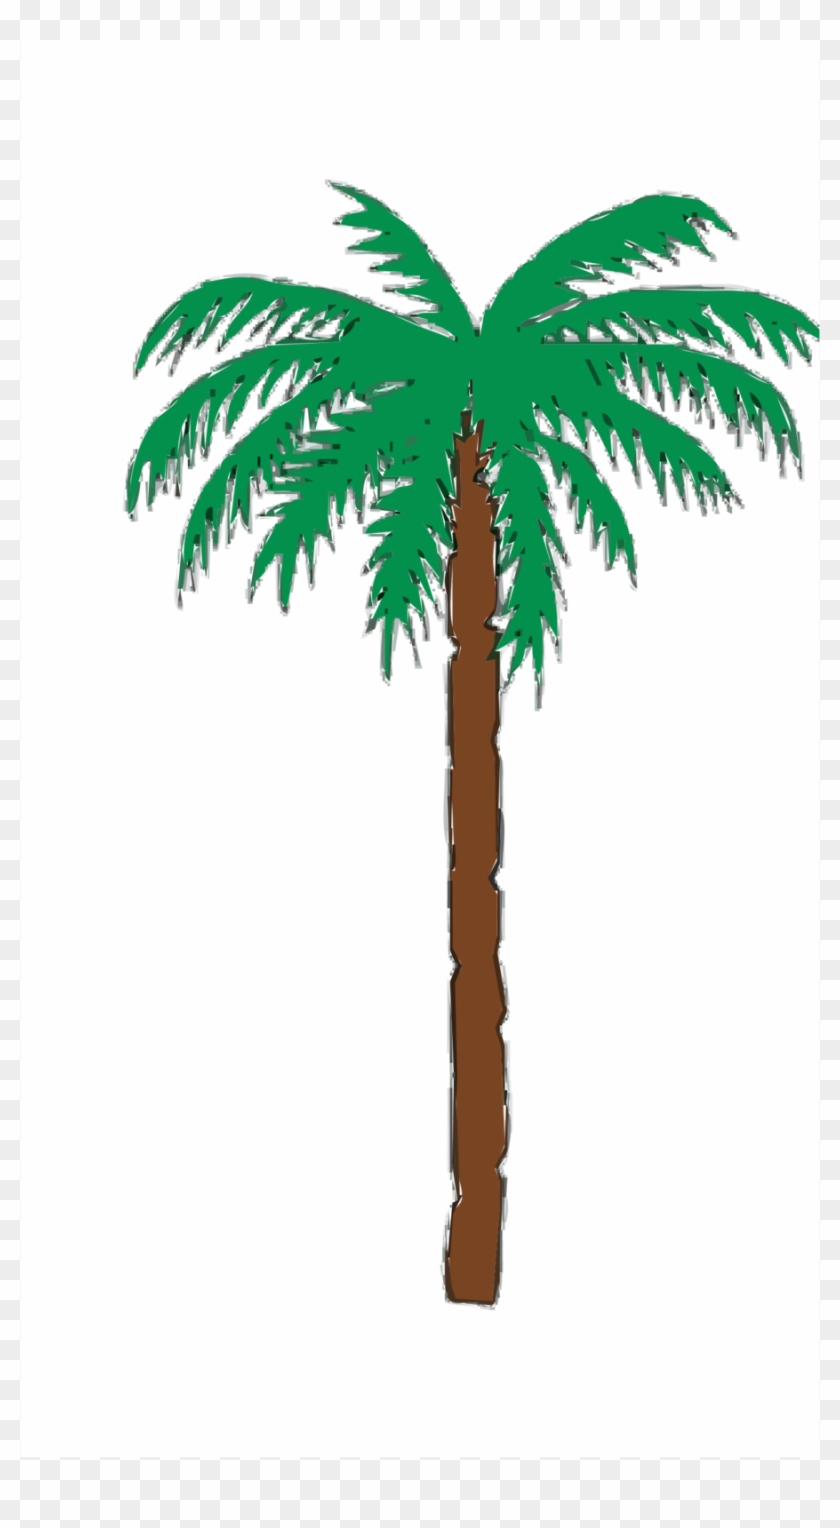 Desert Trees Clipart Palm Trees Clip Art - Merry Christmas Flamingo #1339131